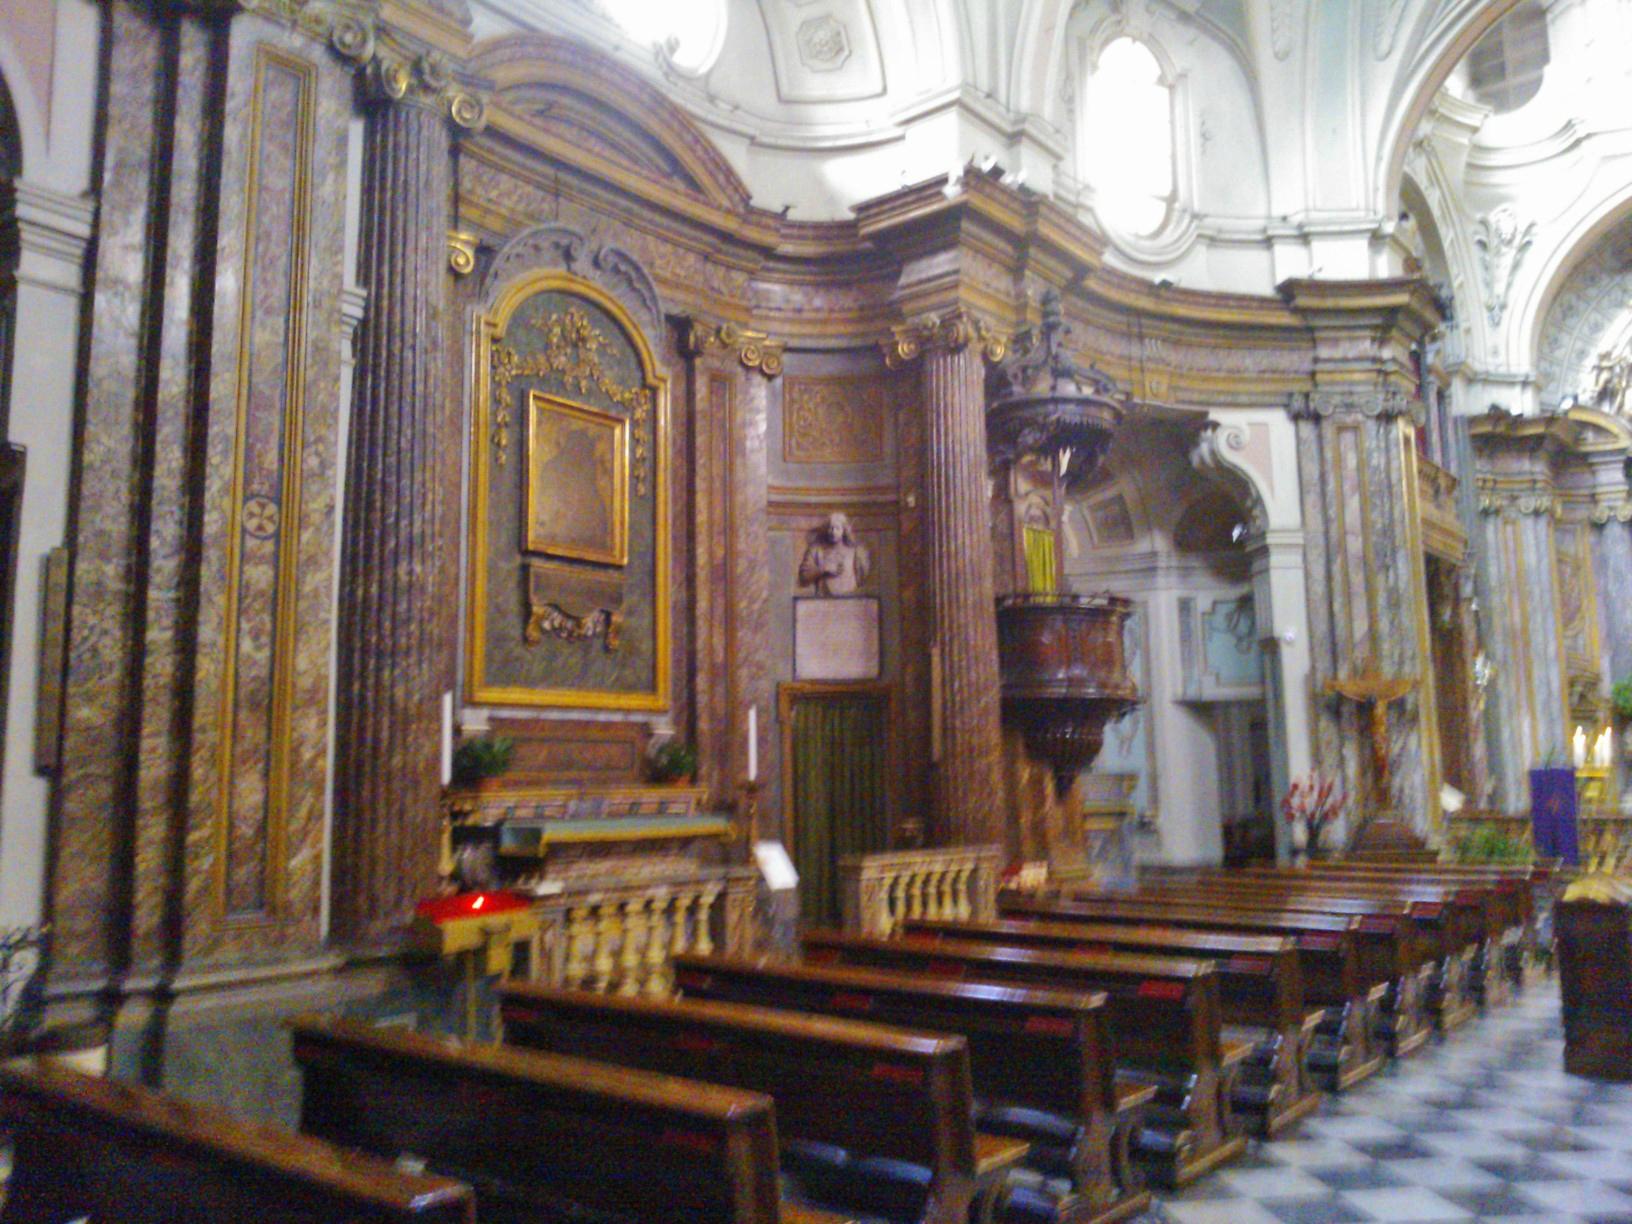 Santa Maria di Piazza